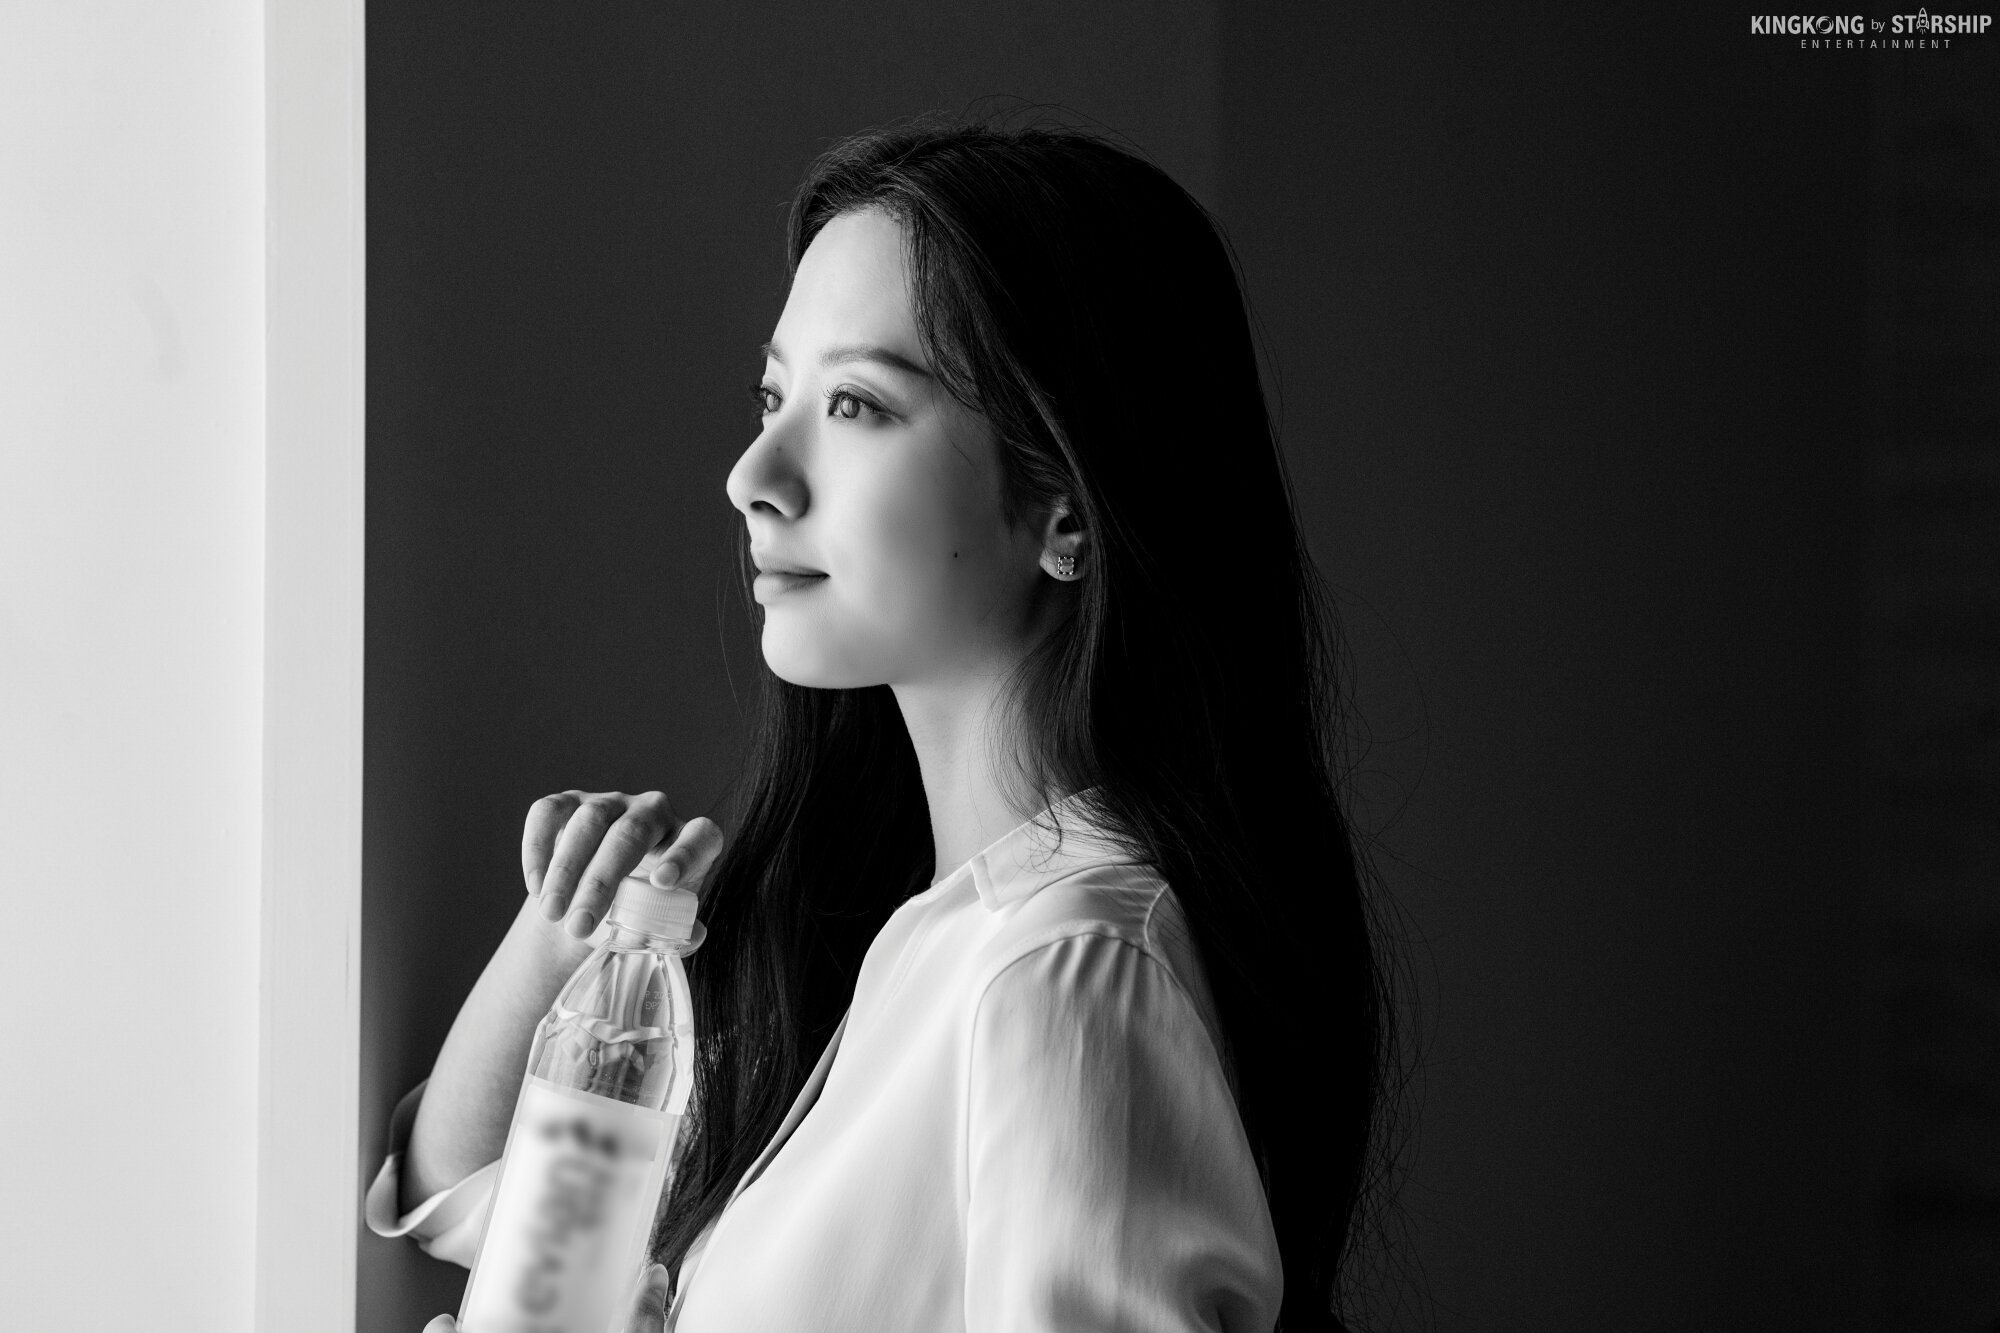 WJSN's Bona Unveils Gorgeous New Actress Profile Photos